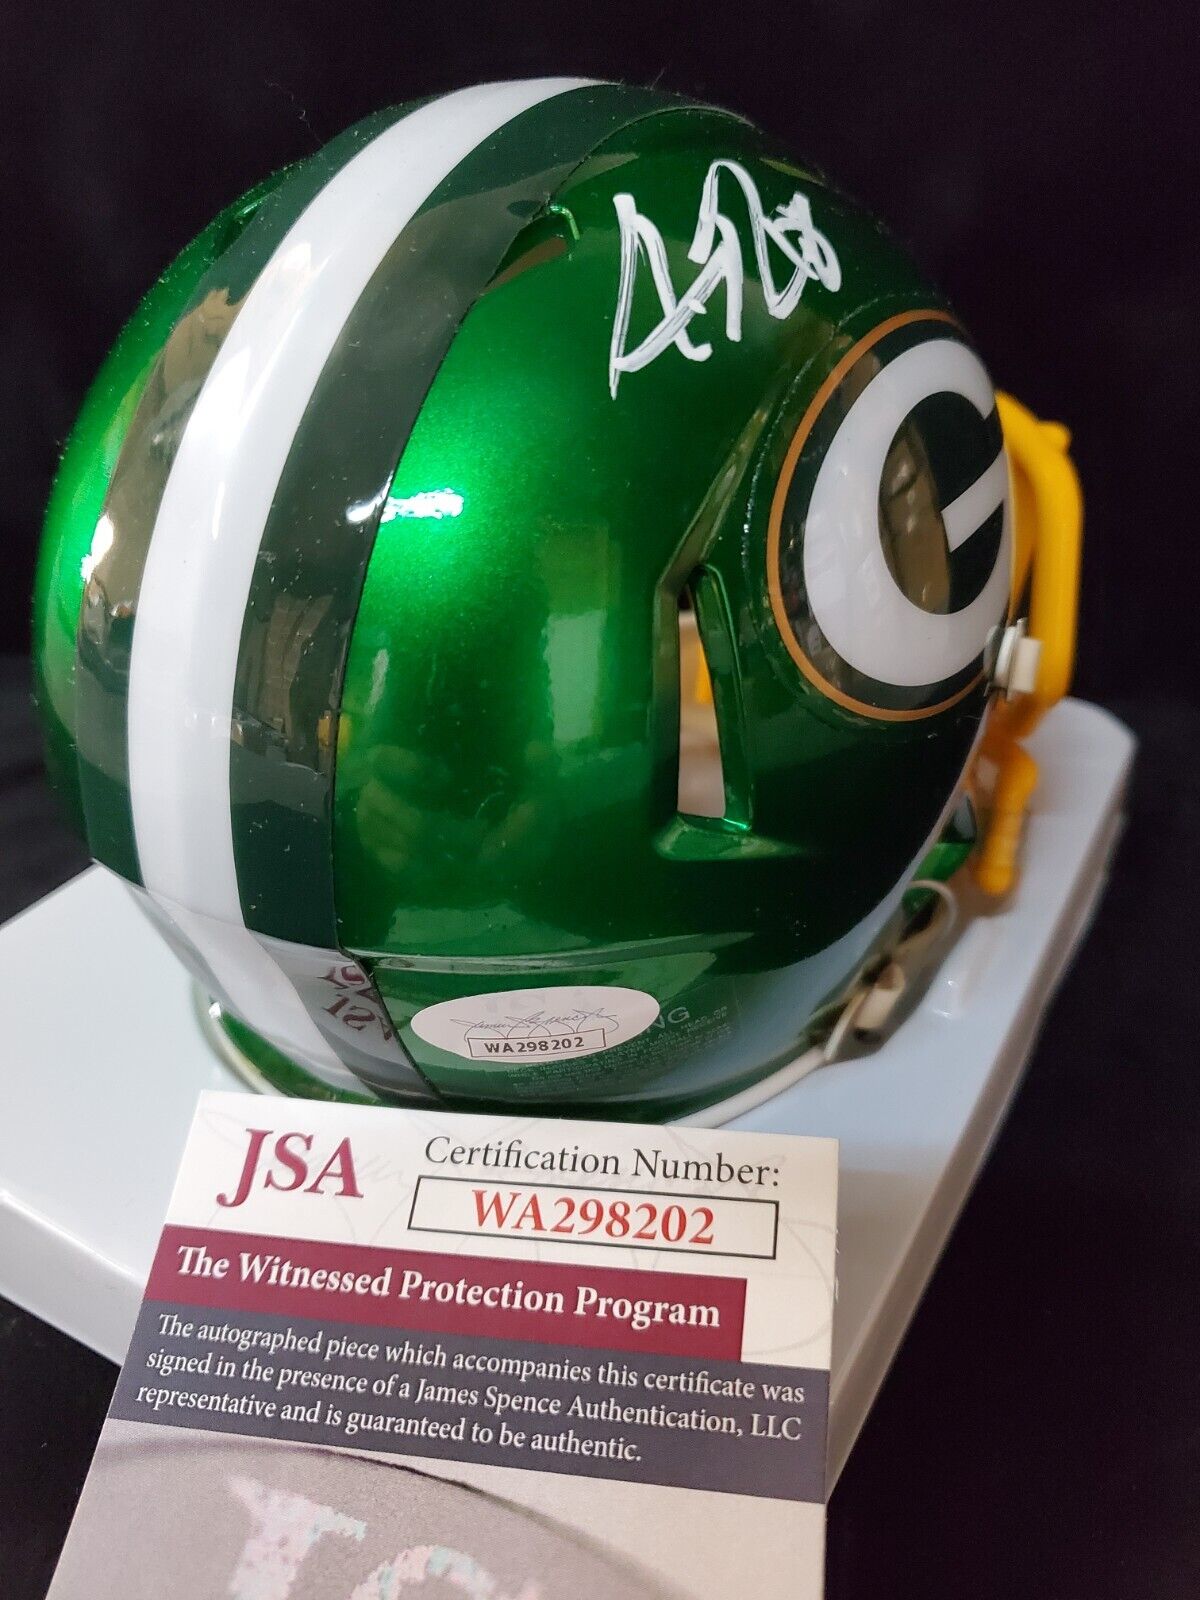 MVP Authentics Green Bay Packers Amari Rodgers Autographed Signed Flash Mini Helmet Jsa Coa 117 sports jersey framing , jersey framing